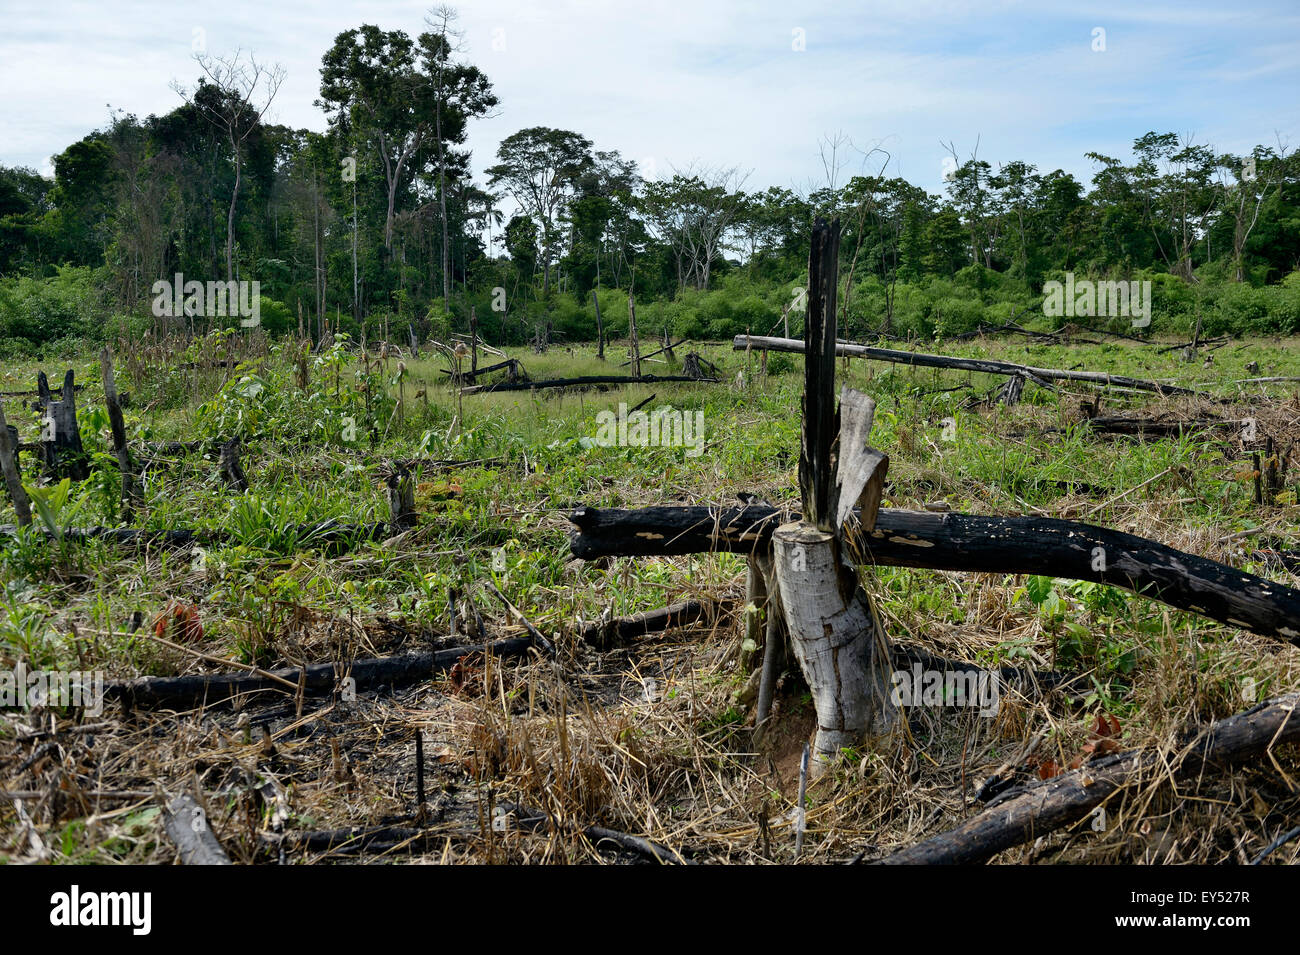 Rain forest clearance -Fotos und -Bildmaterial in hoher Auflösung – Alamy